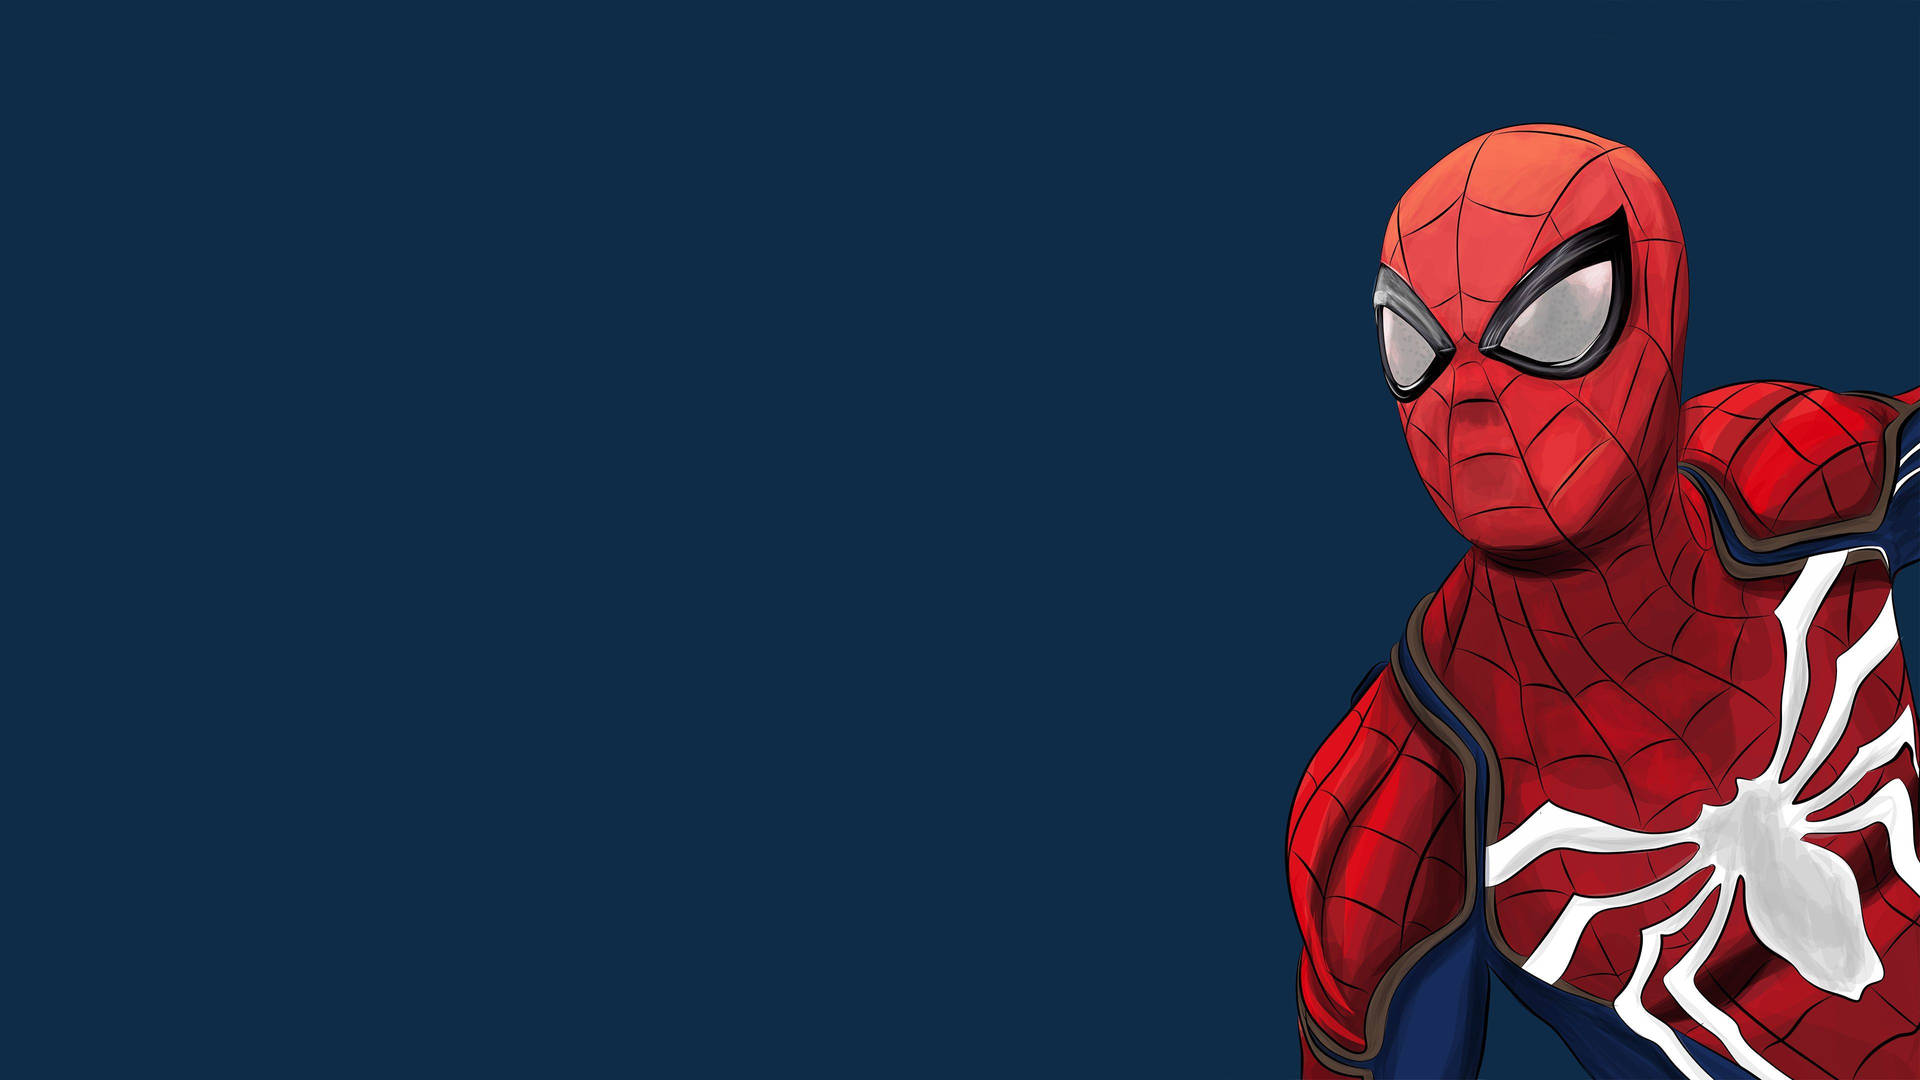 Spiderman In The Corner Background